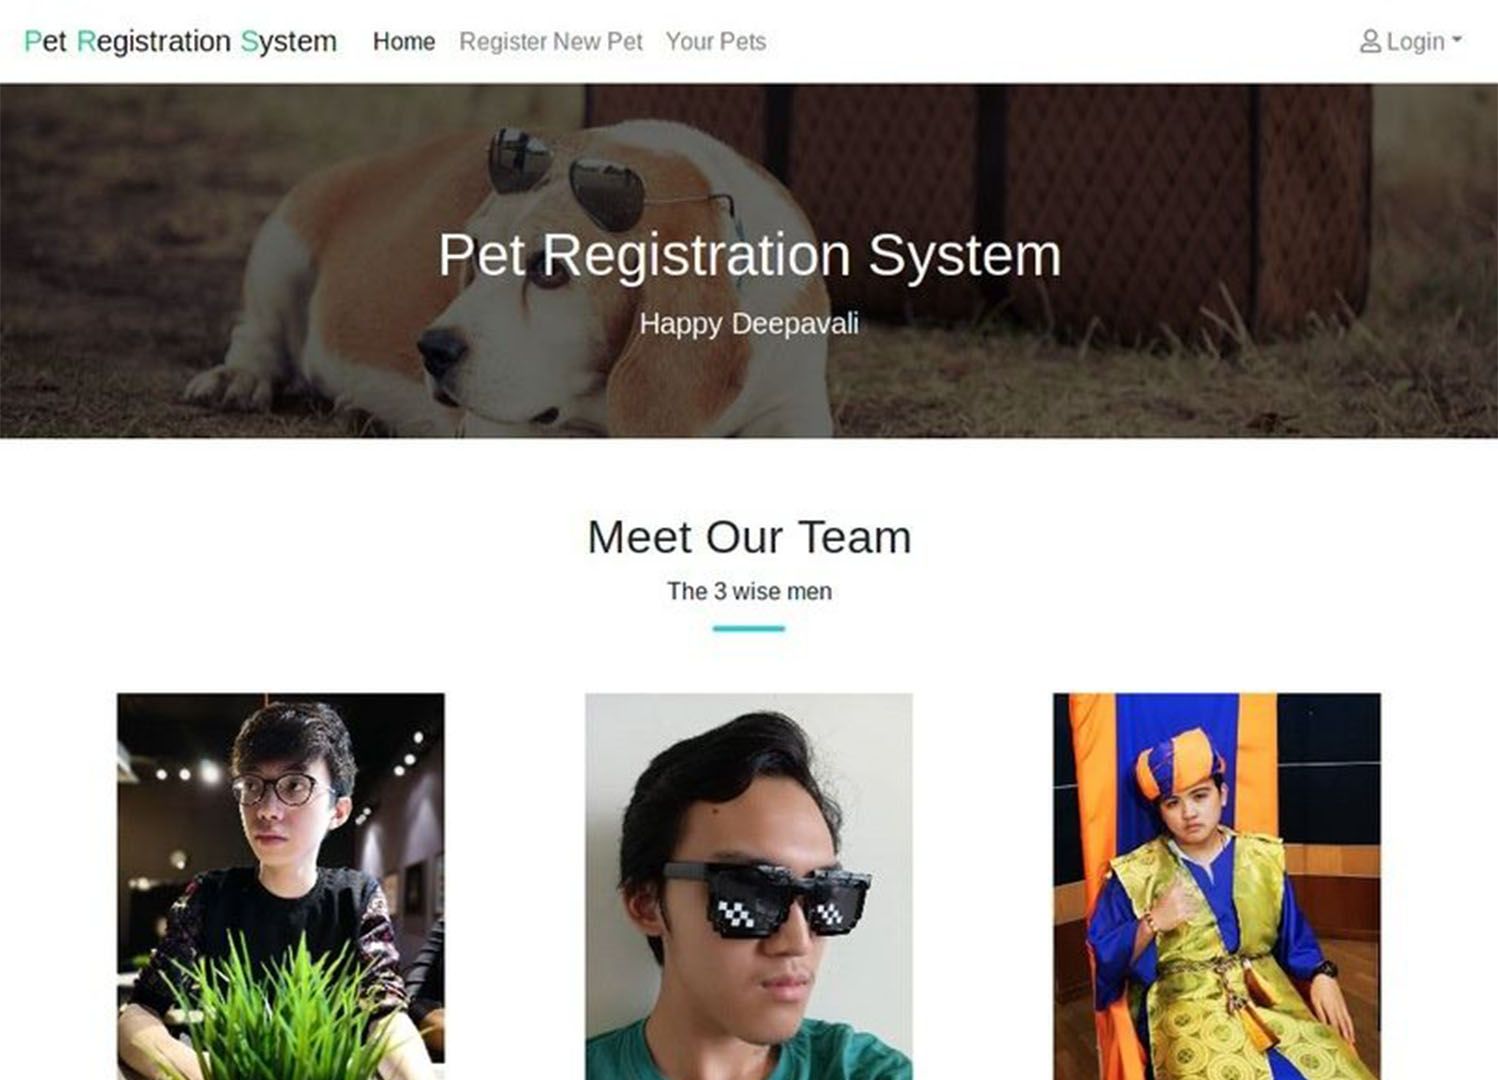 Pet Registration System image cap